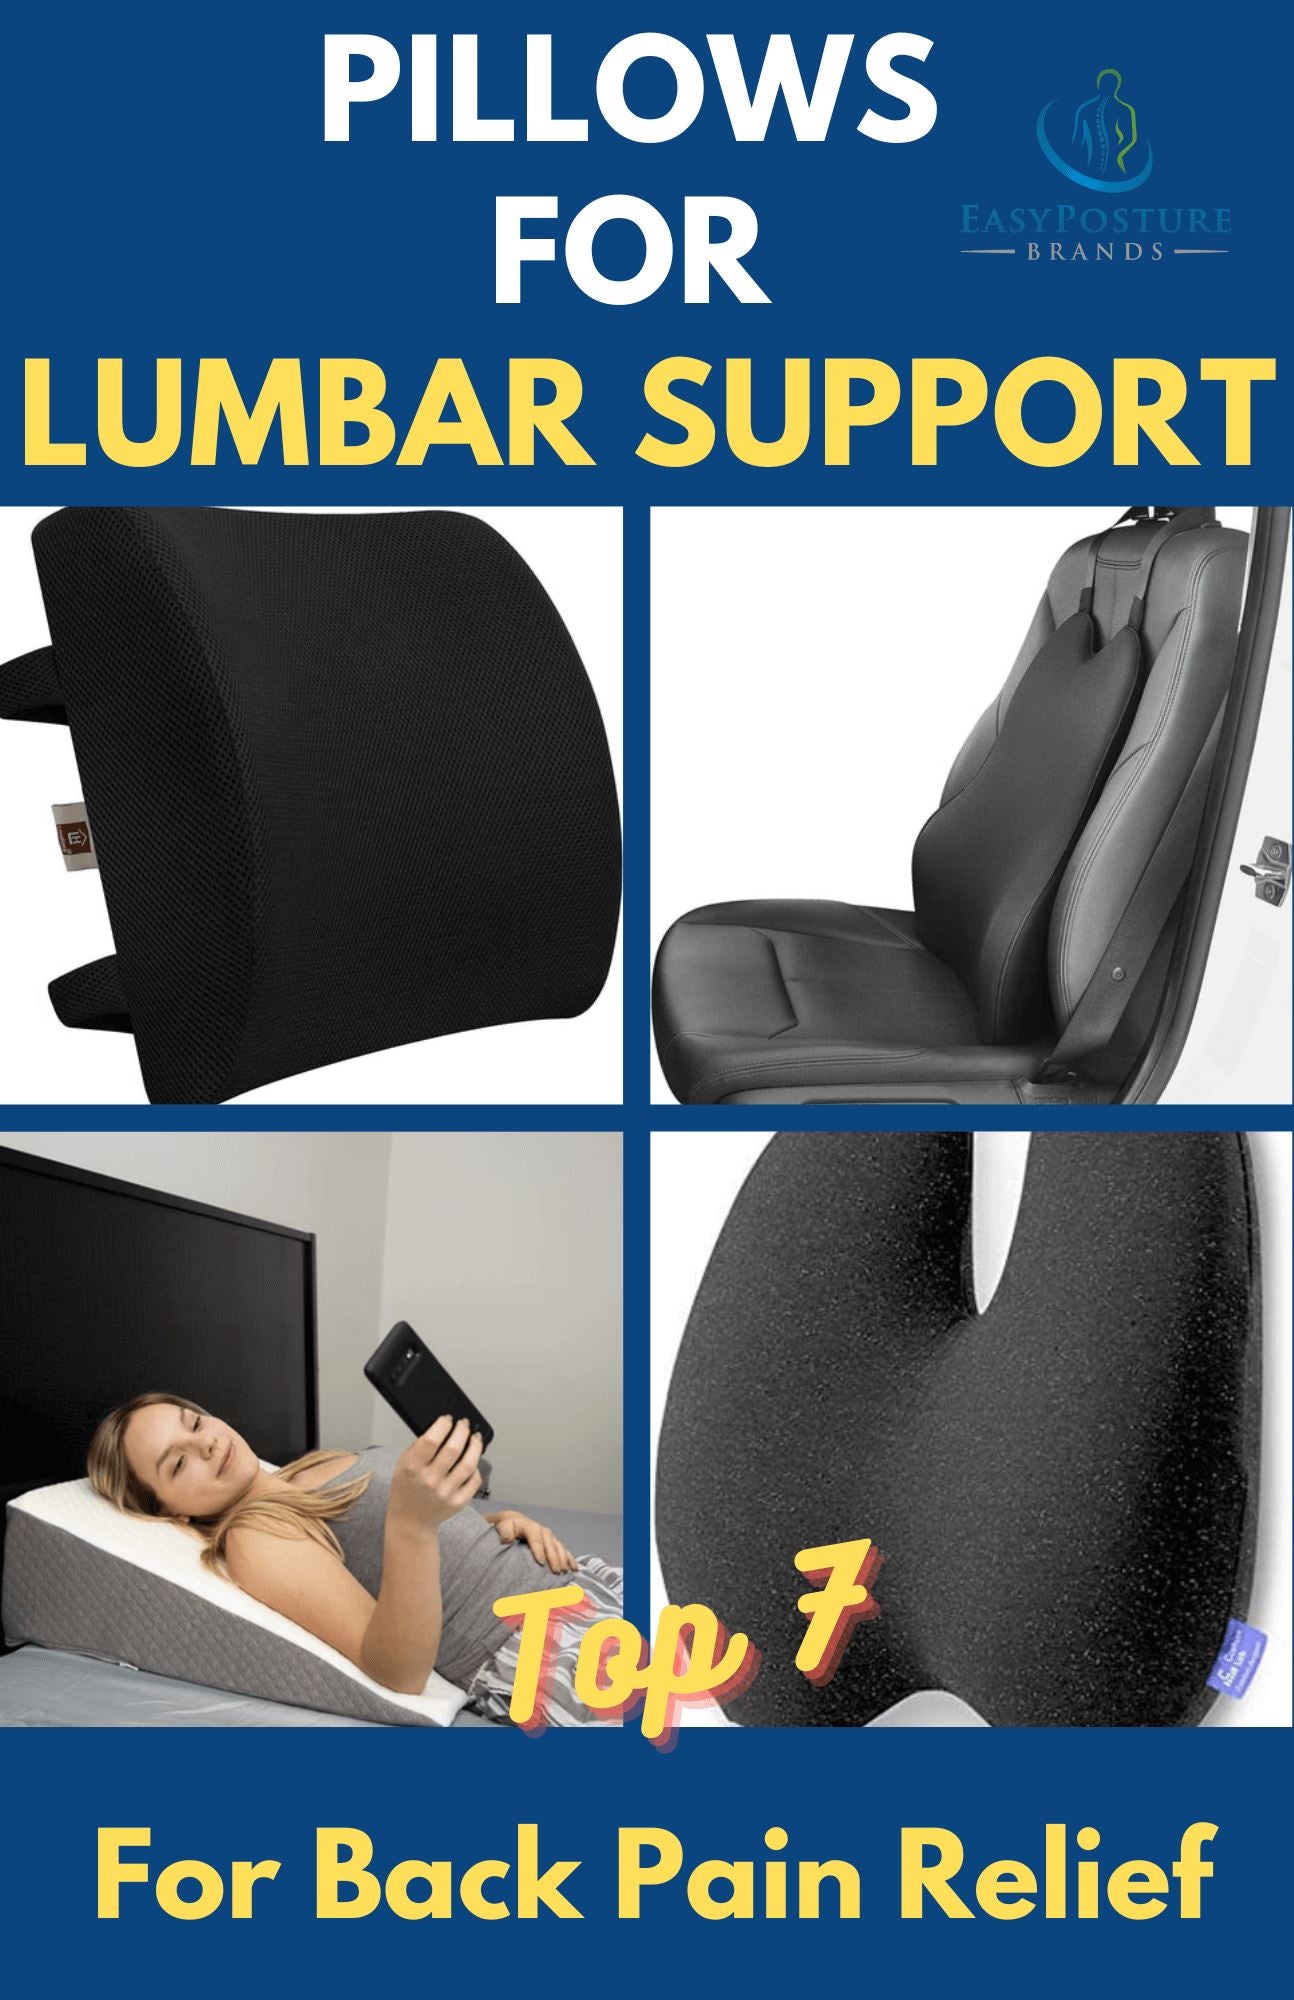 Dreamer Car Seat Cushion for Driver/Passenger - Wedge Cushion for Posture